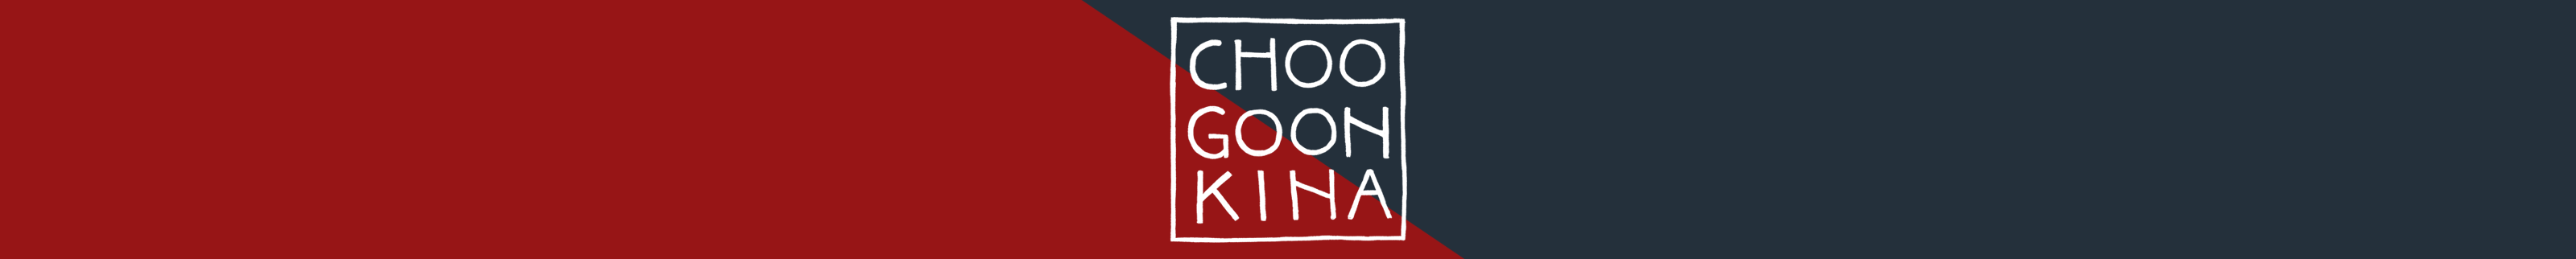 Kato Choogoonkina profil başlığı